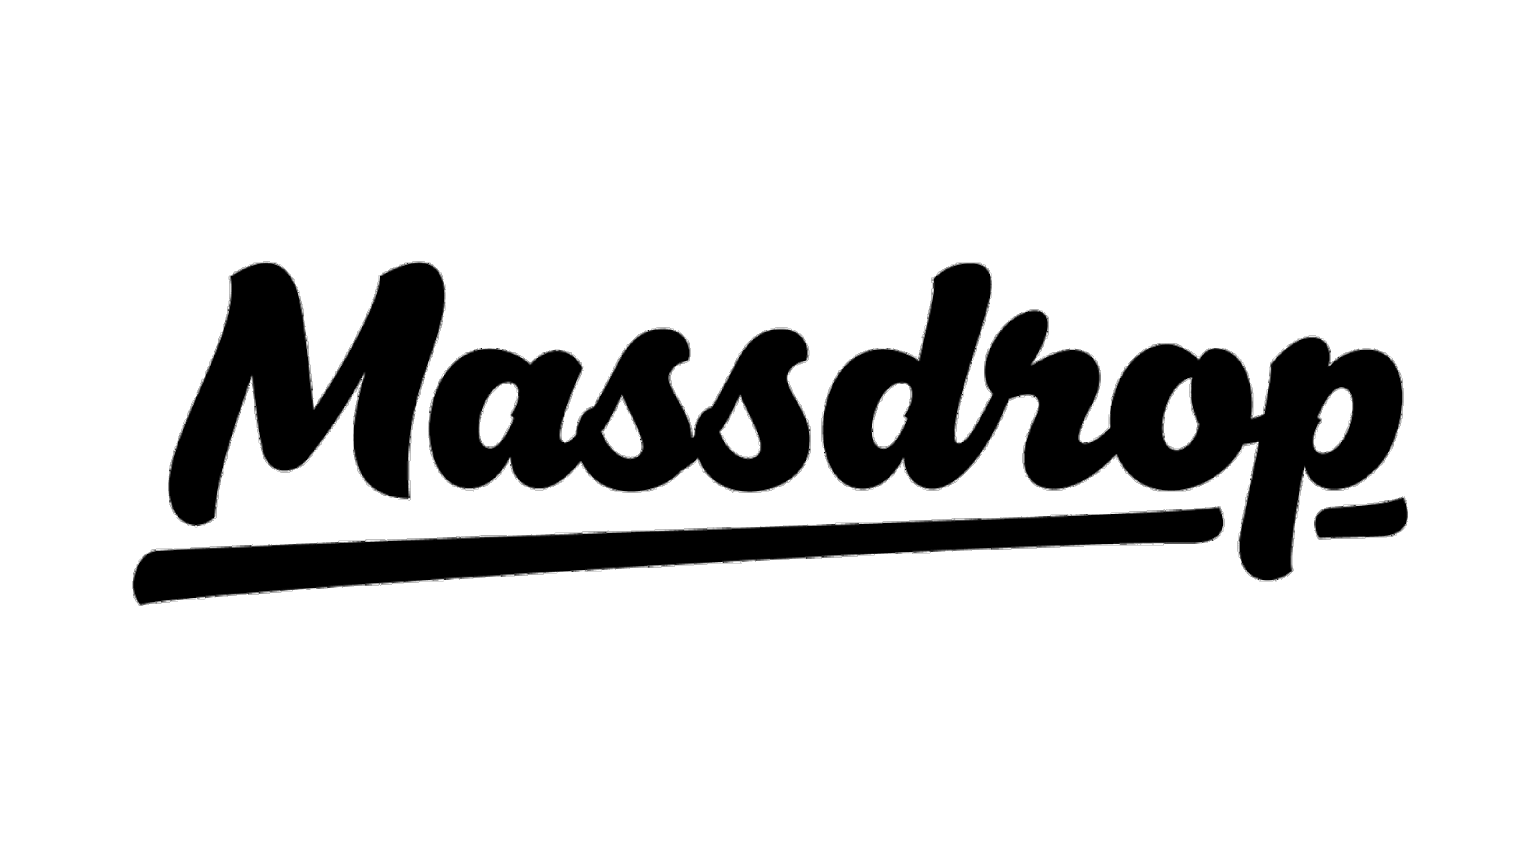 Massdrop Logo